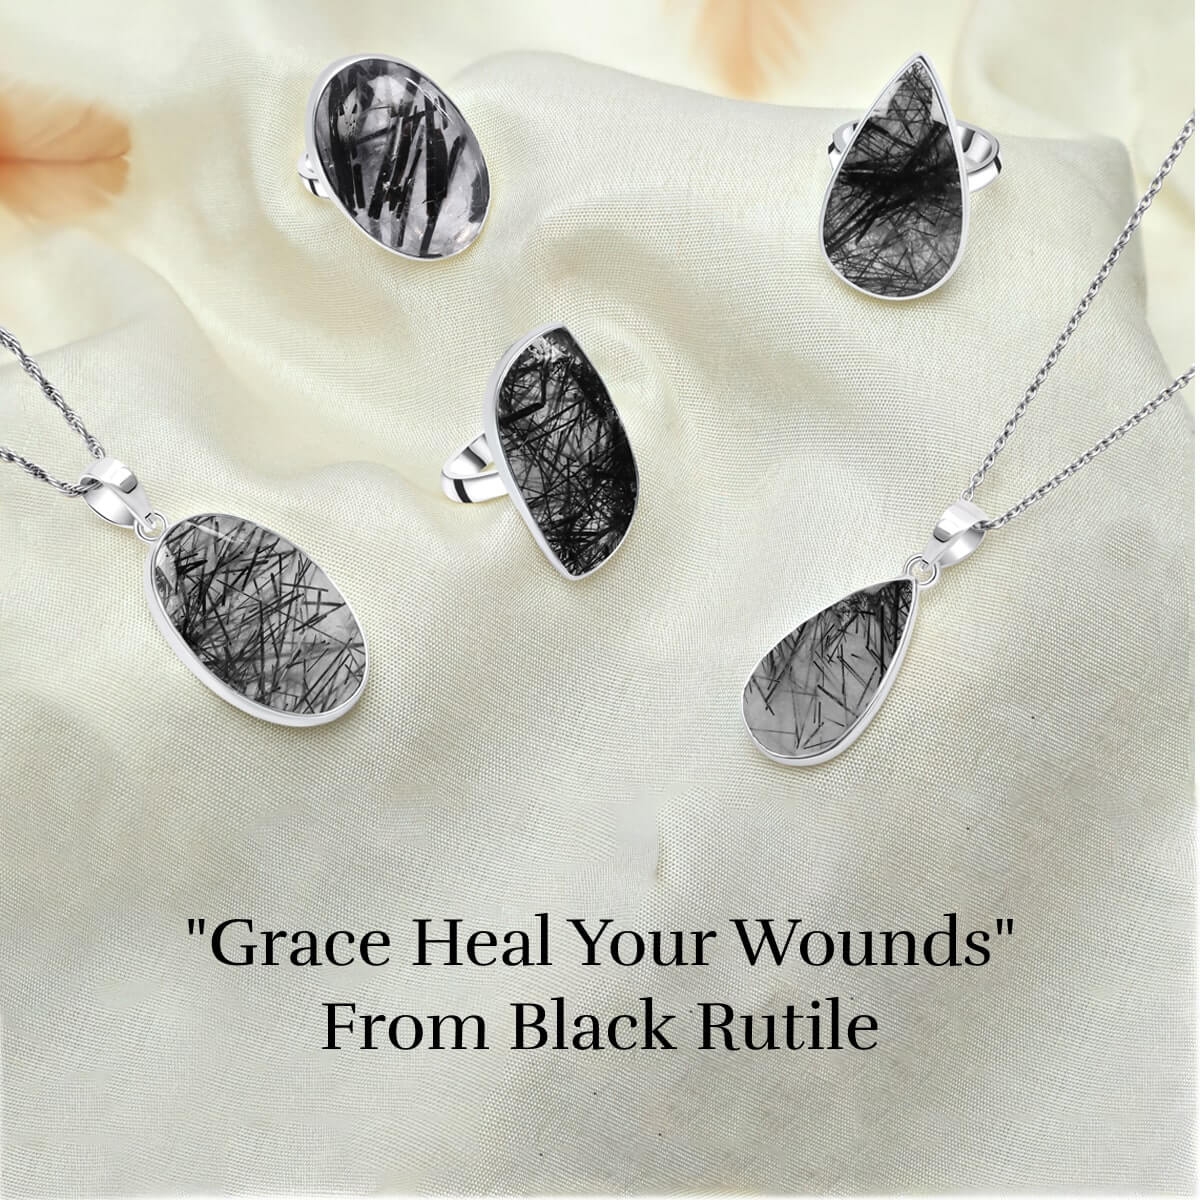 Physical healing benefits of black rutile